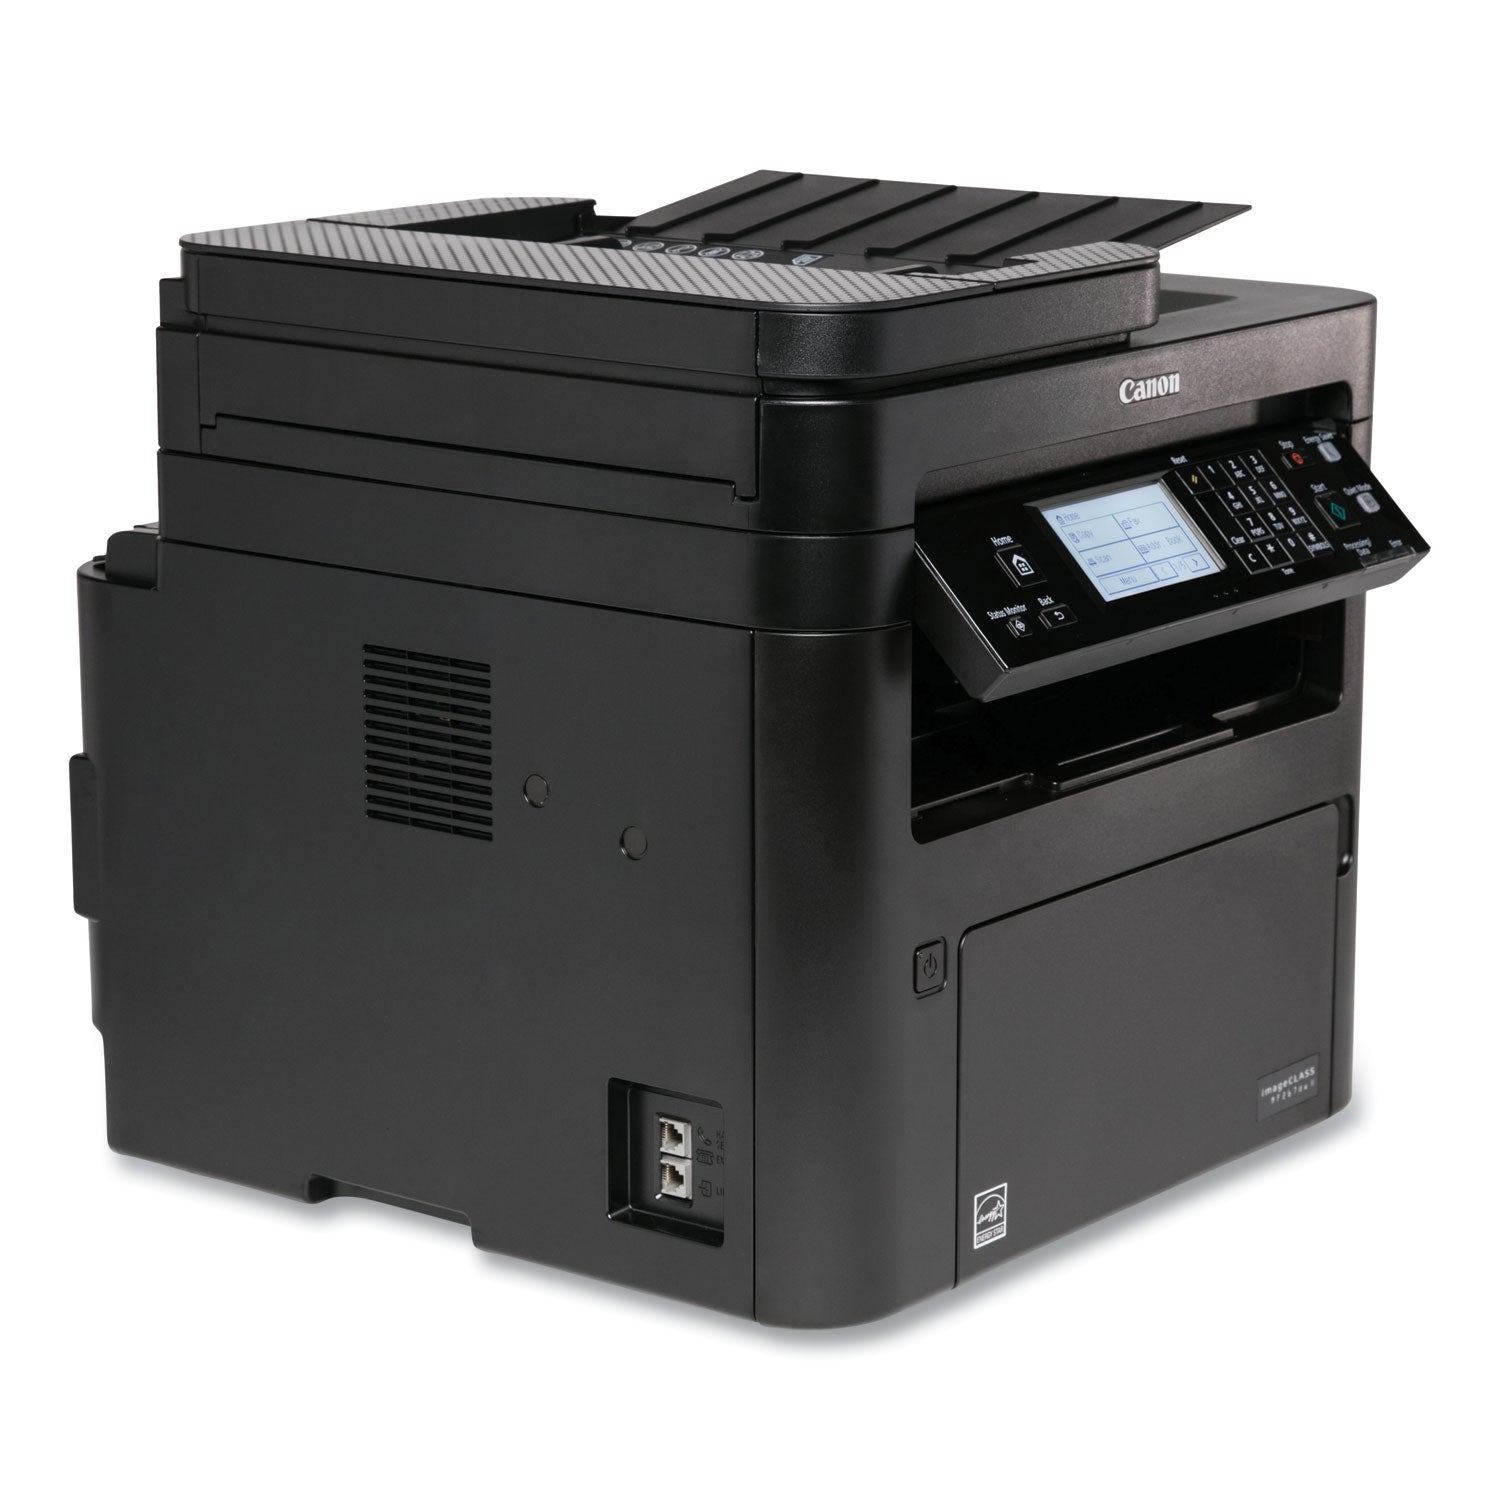 imageclass-mf267dw-ii-wireless-multifunction-laser-printer-copy-fax-print-scan_cnm5938c010 - 3